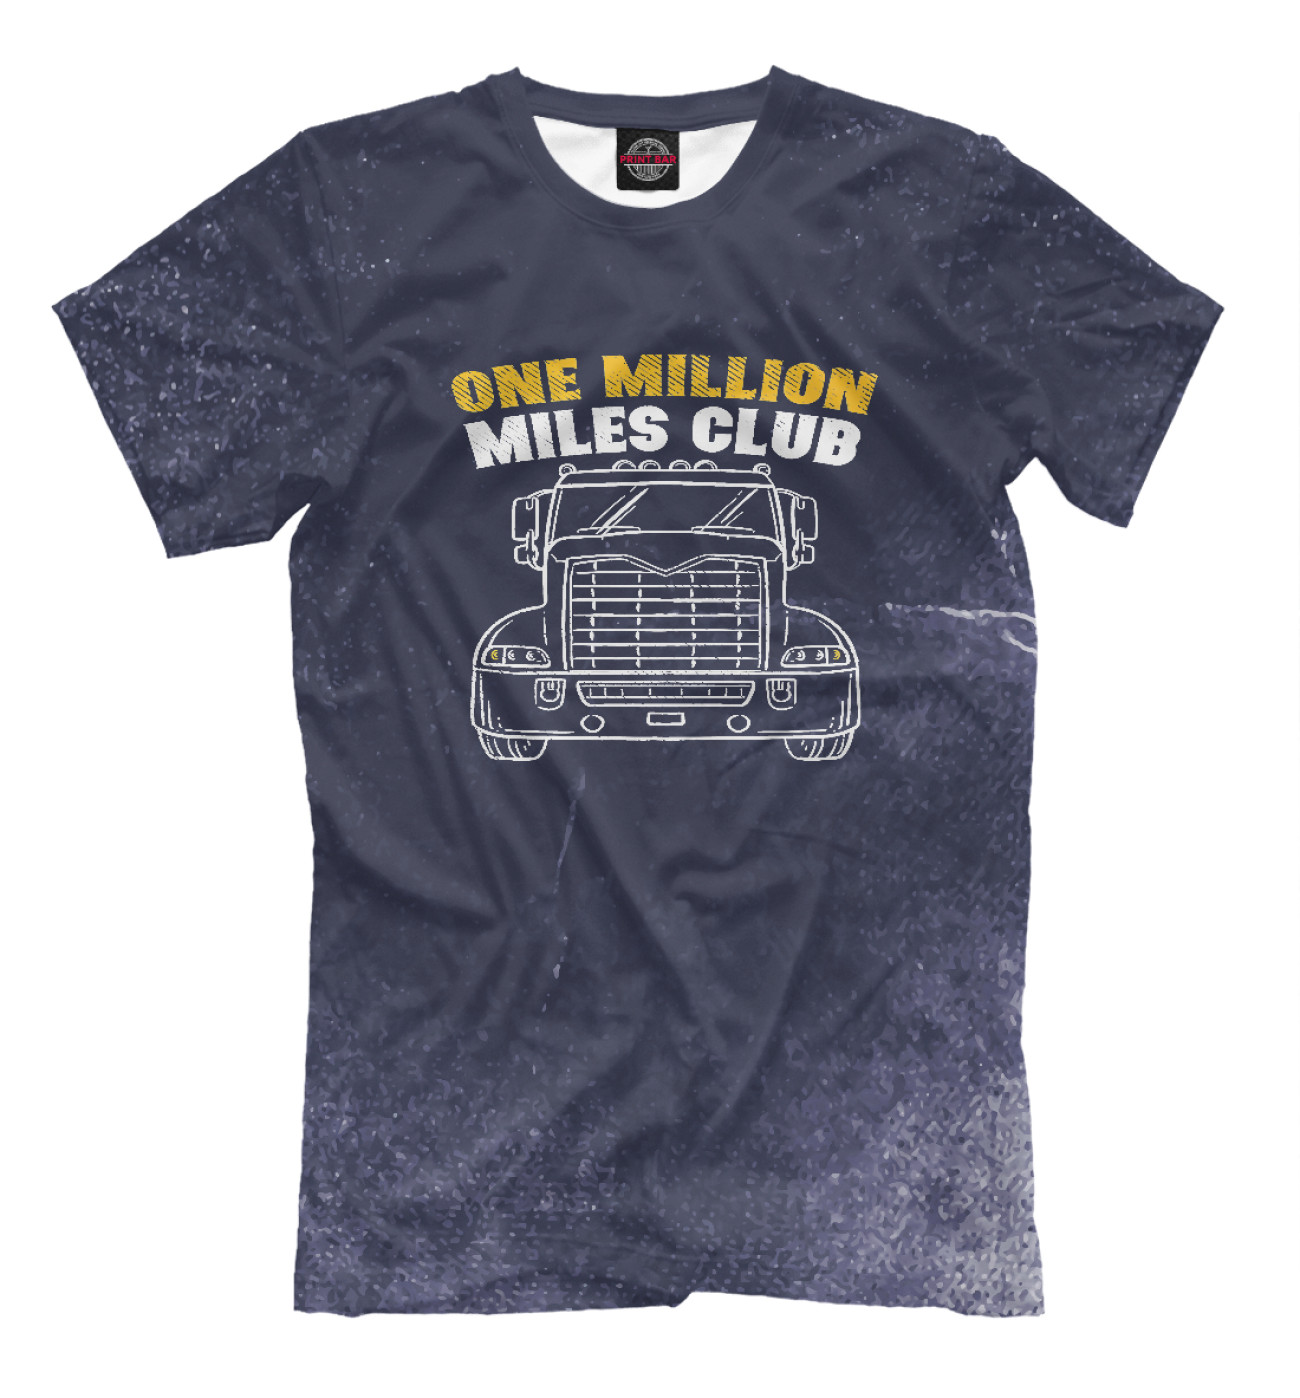 Мужская Футболка One Million Miles Club, артикул: VDT-414727-fut-2